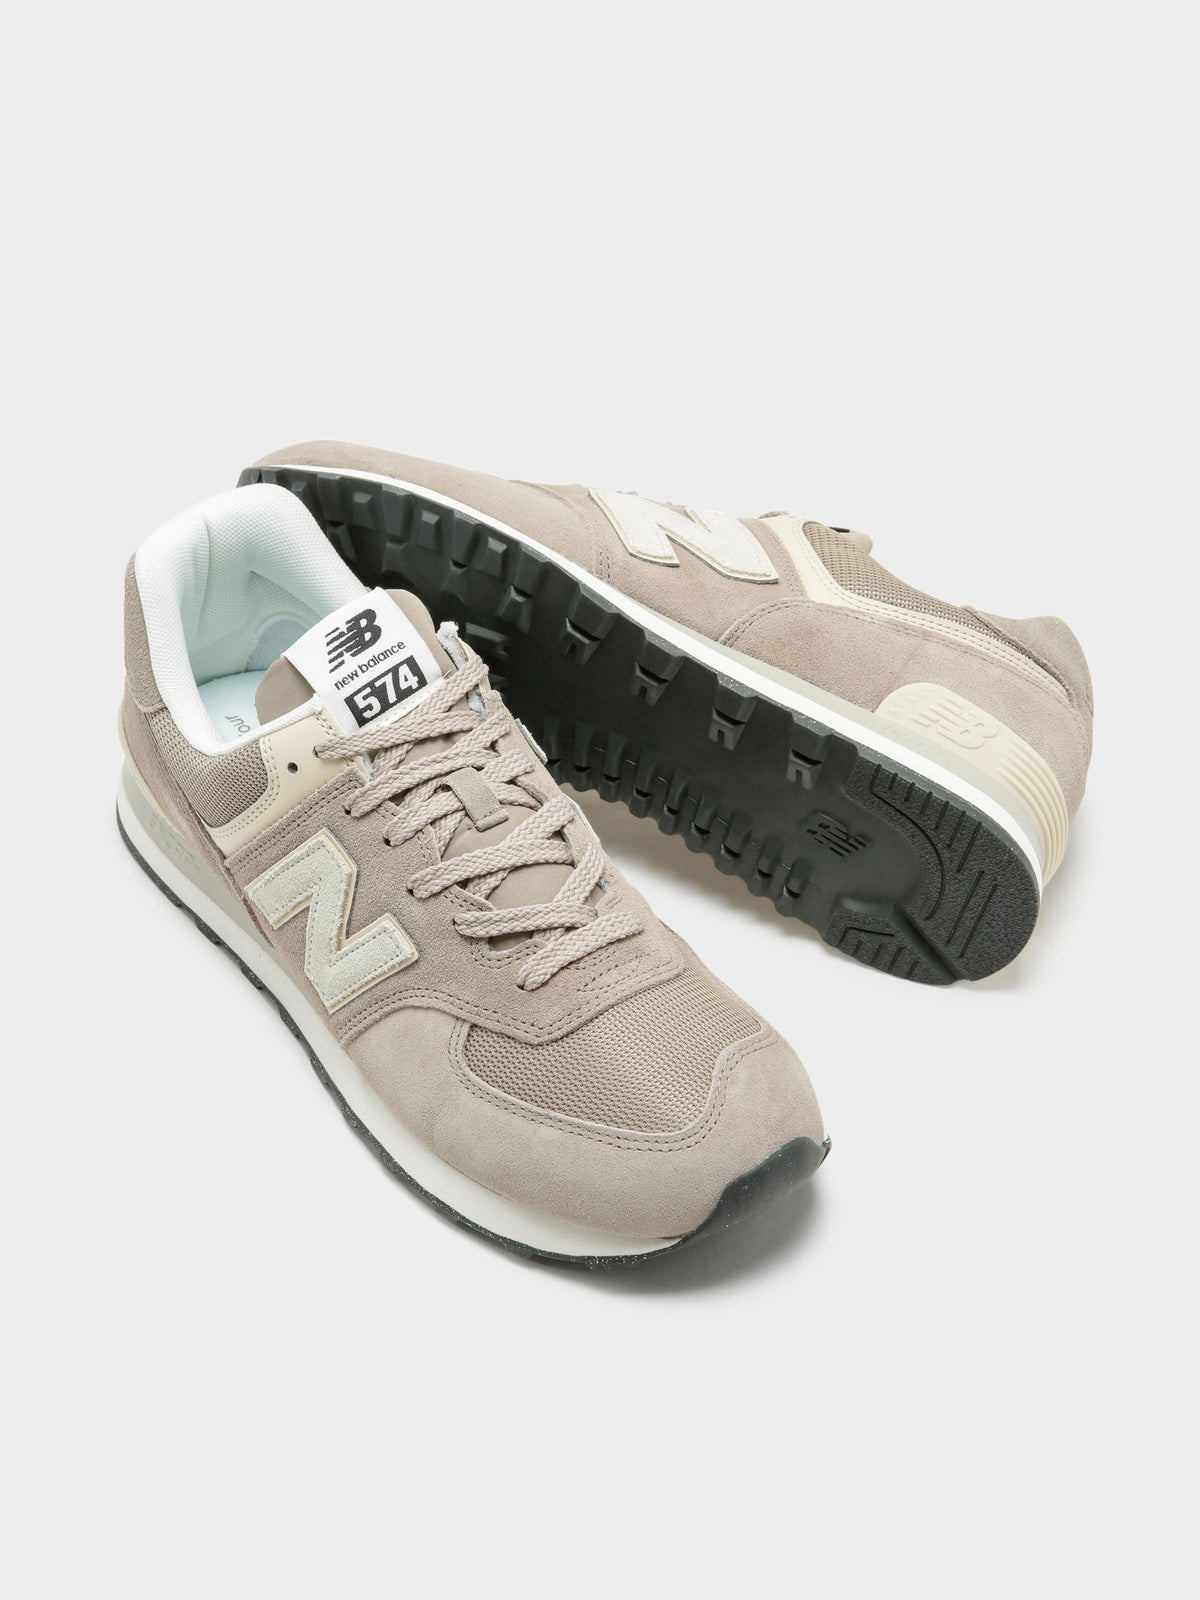 Unisex 574 Sneakers in Brown &amp; Cream